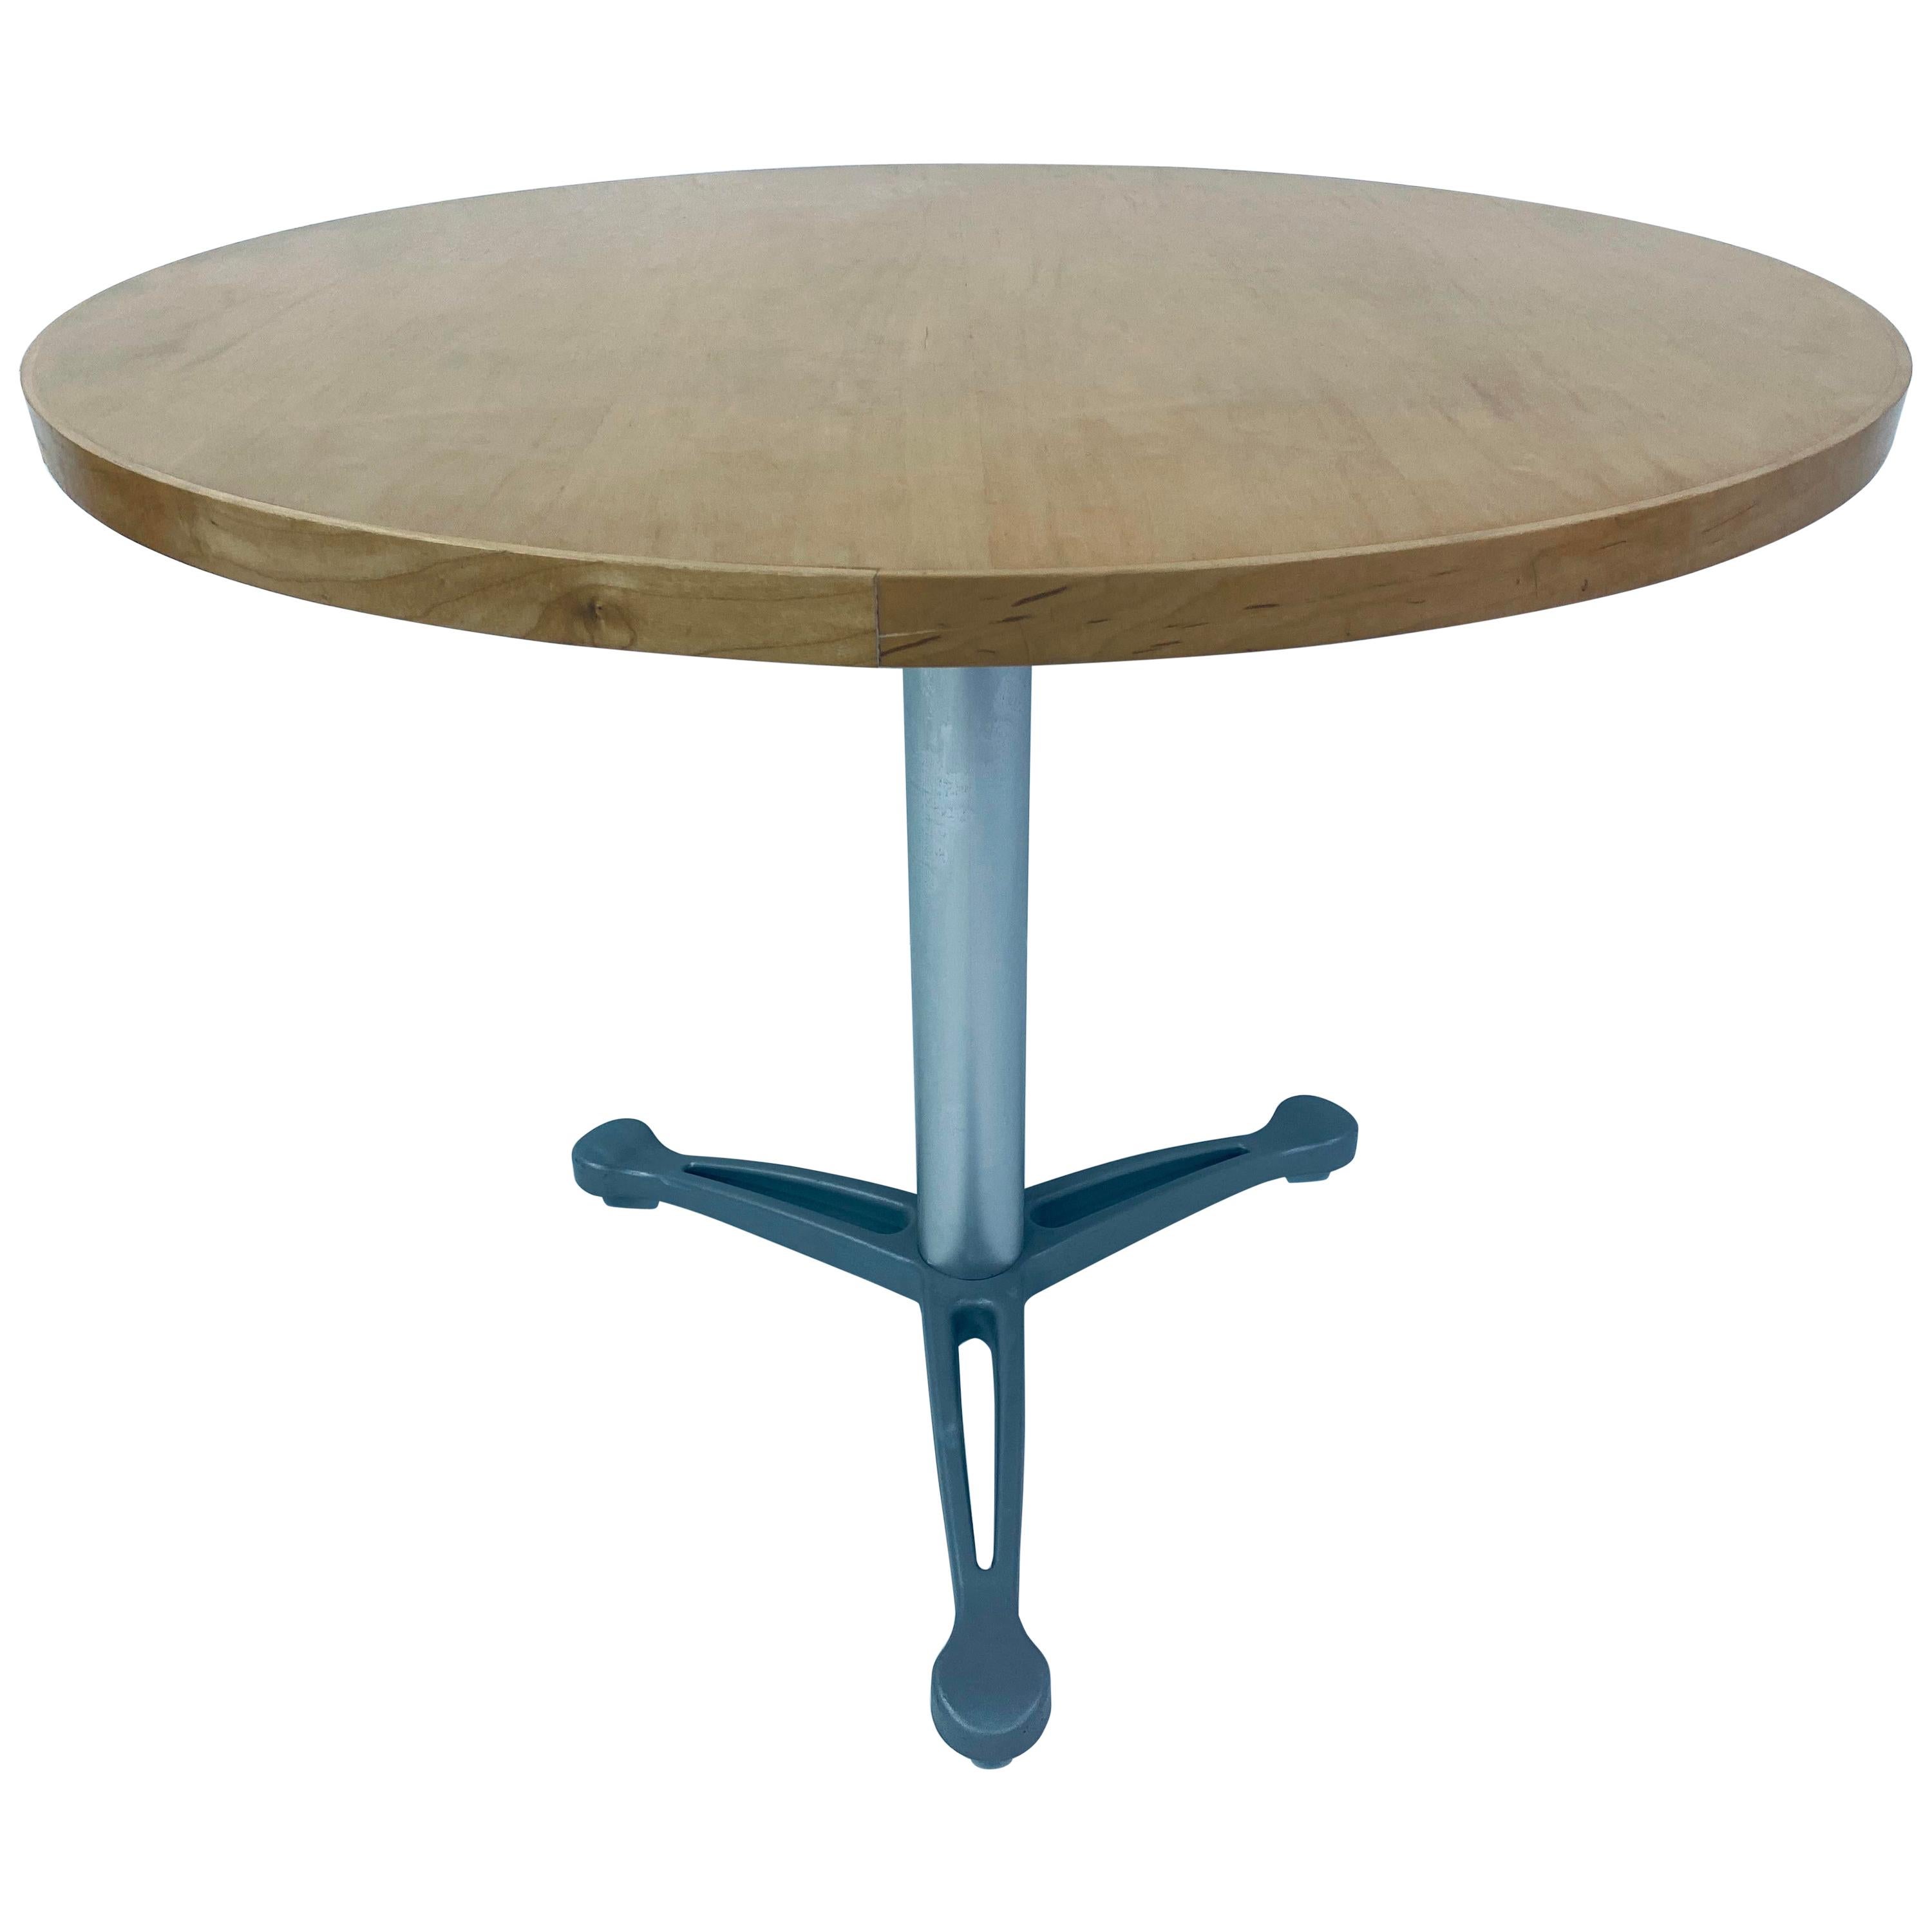 Emanuela Frattini “Propeller” Table for Knoll For Sale